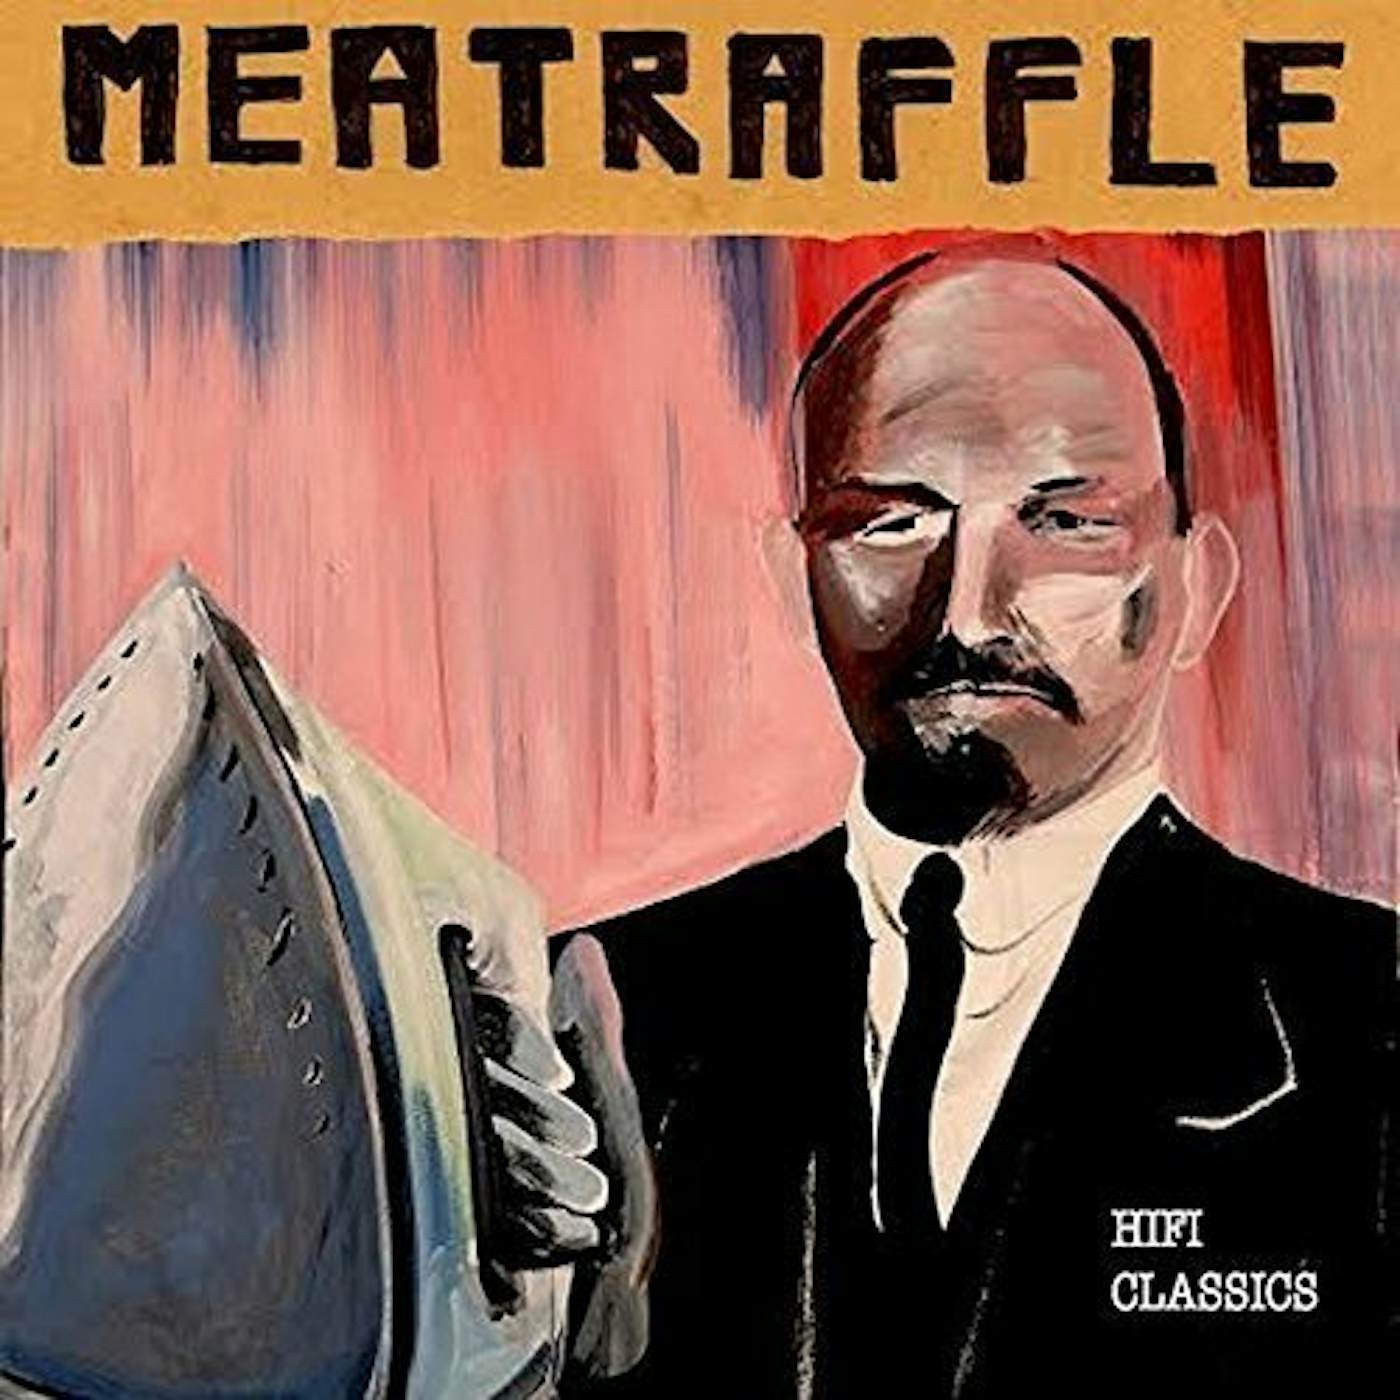 Meatraffle HI FI CLASSIC CD